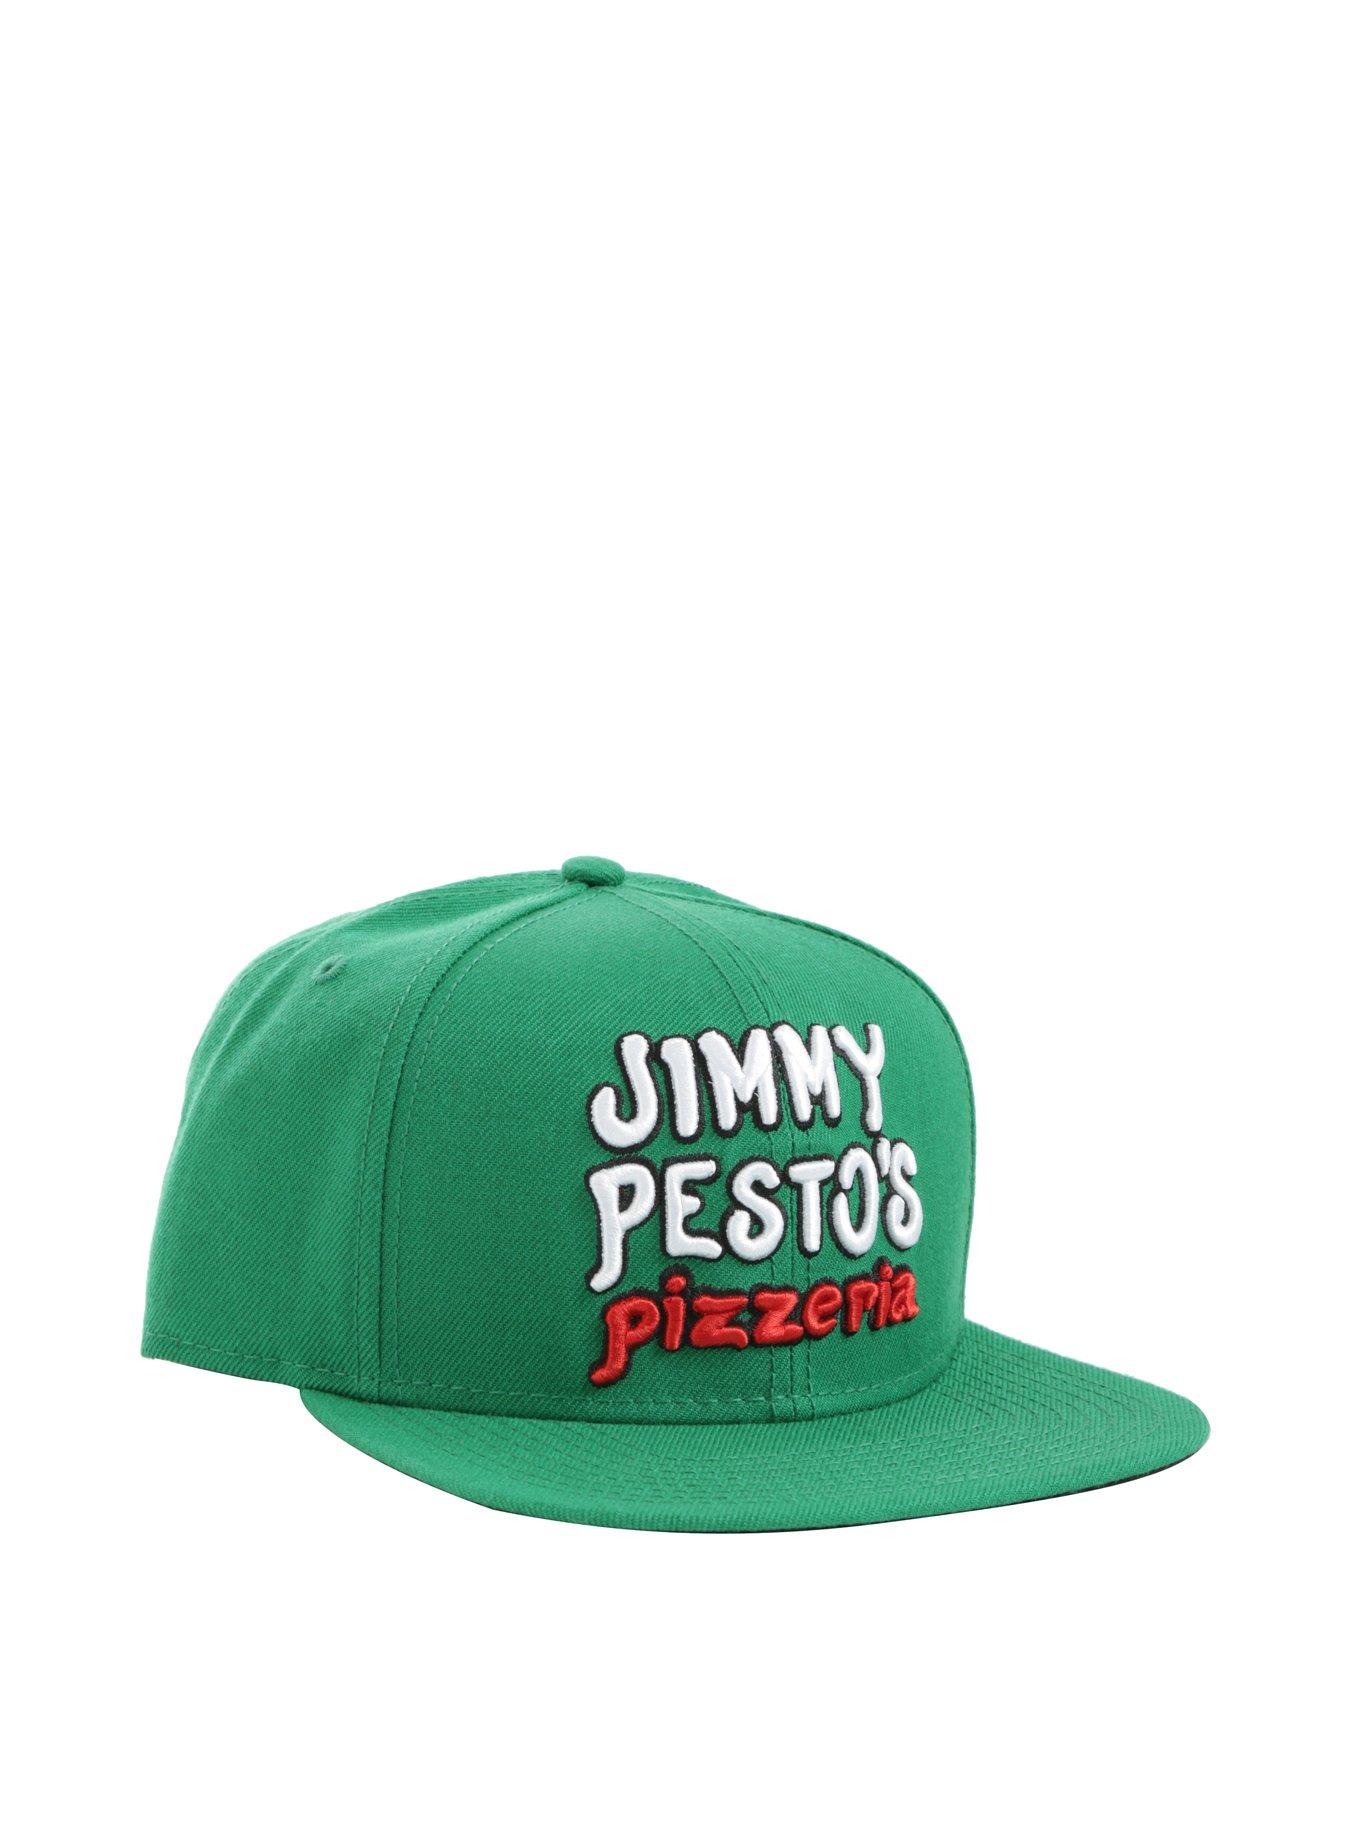 Bob's Burgers Jimmy Pesto's Pizzeria Snapback Hat, , hi-res